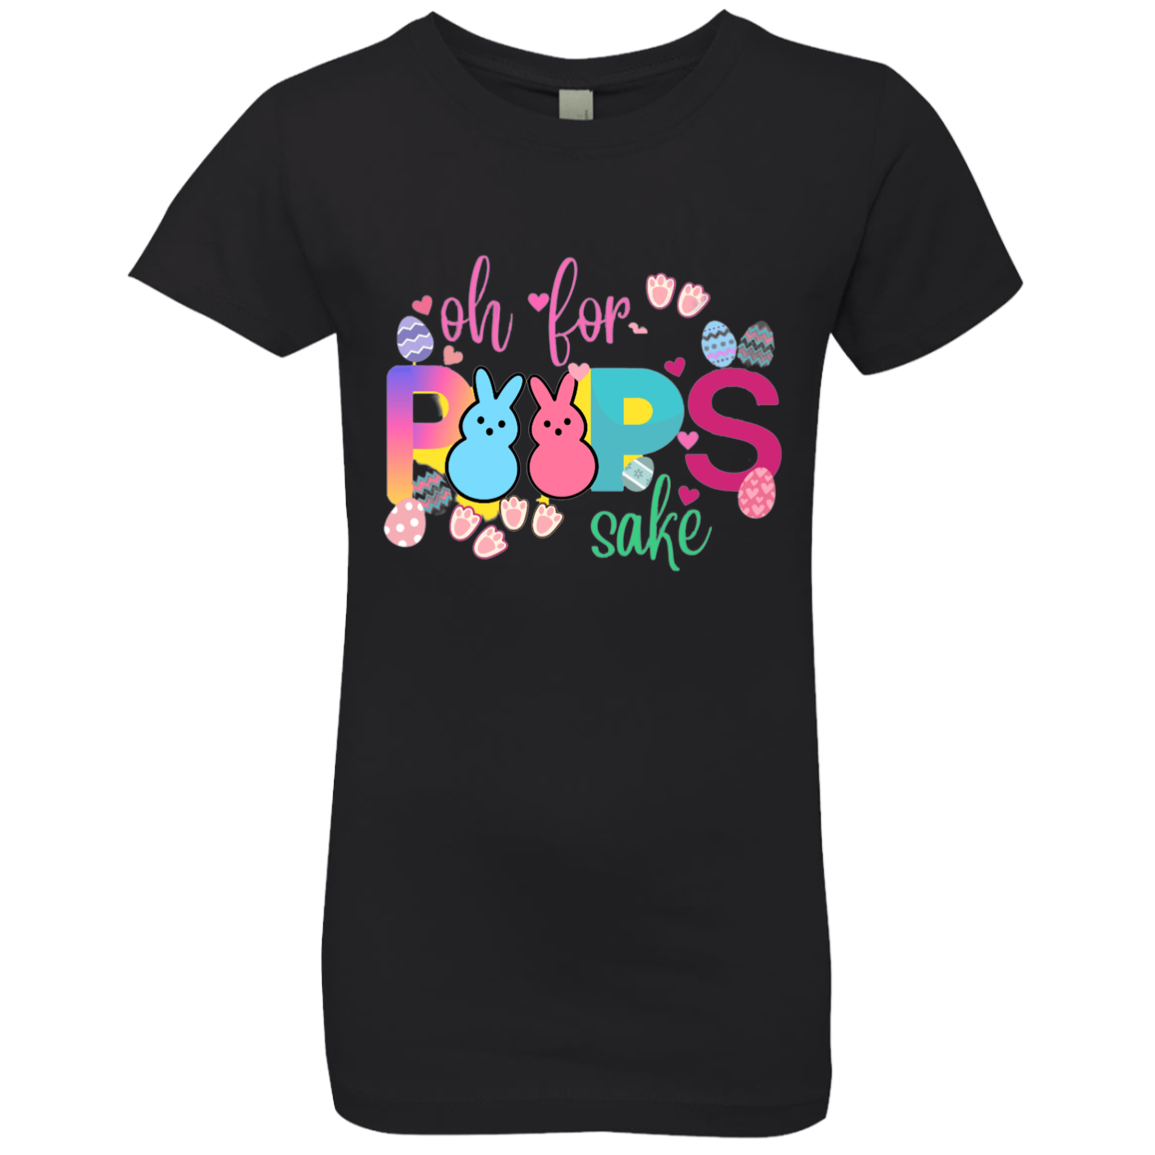 Oh For Peeps- Girls' Princess T-Shirt